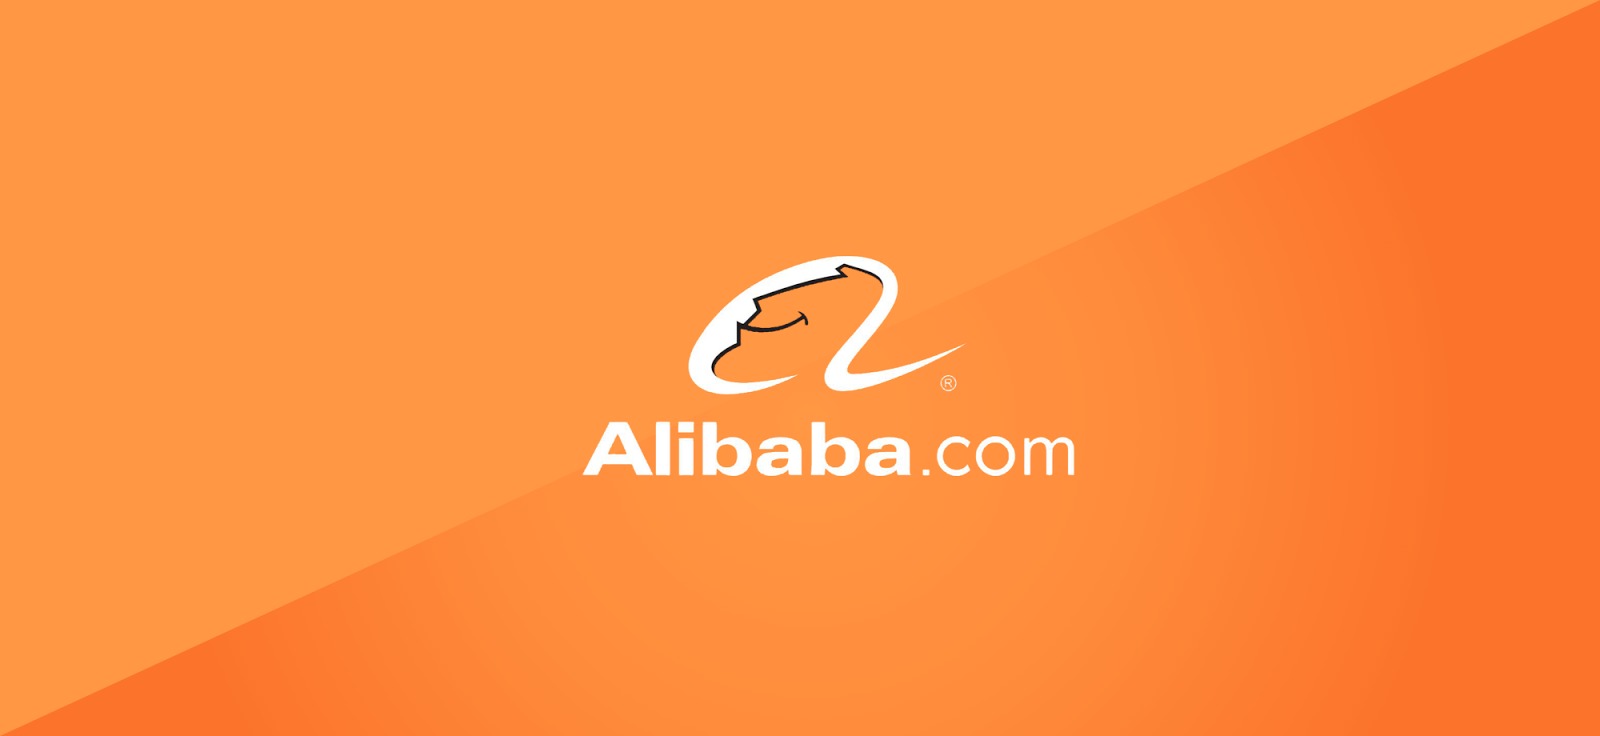 tiếp thị ebps alibaba